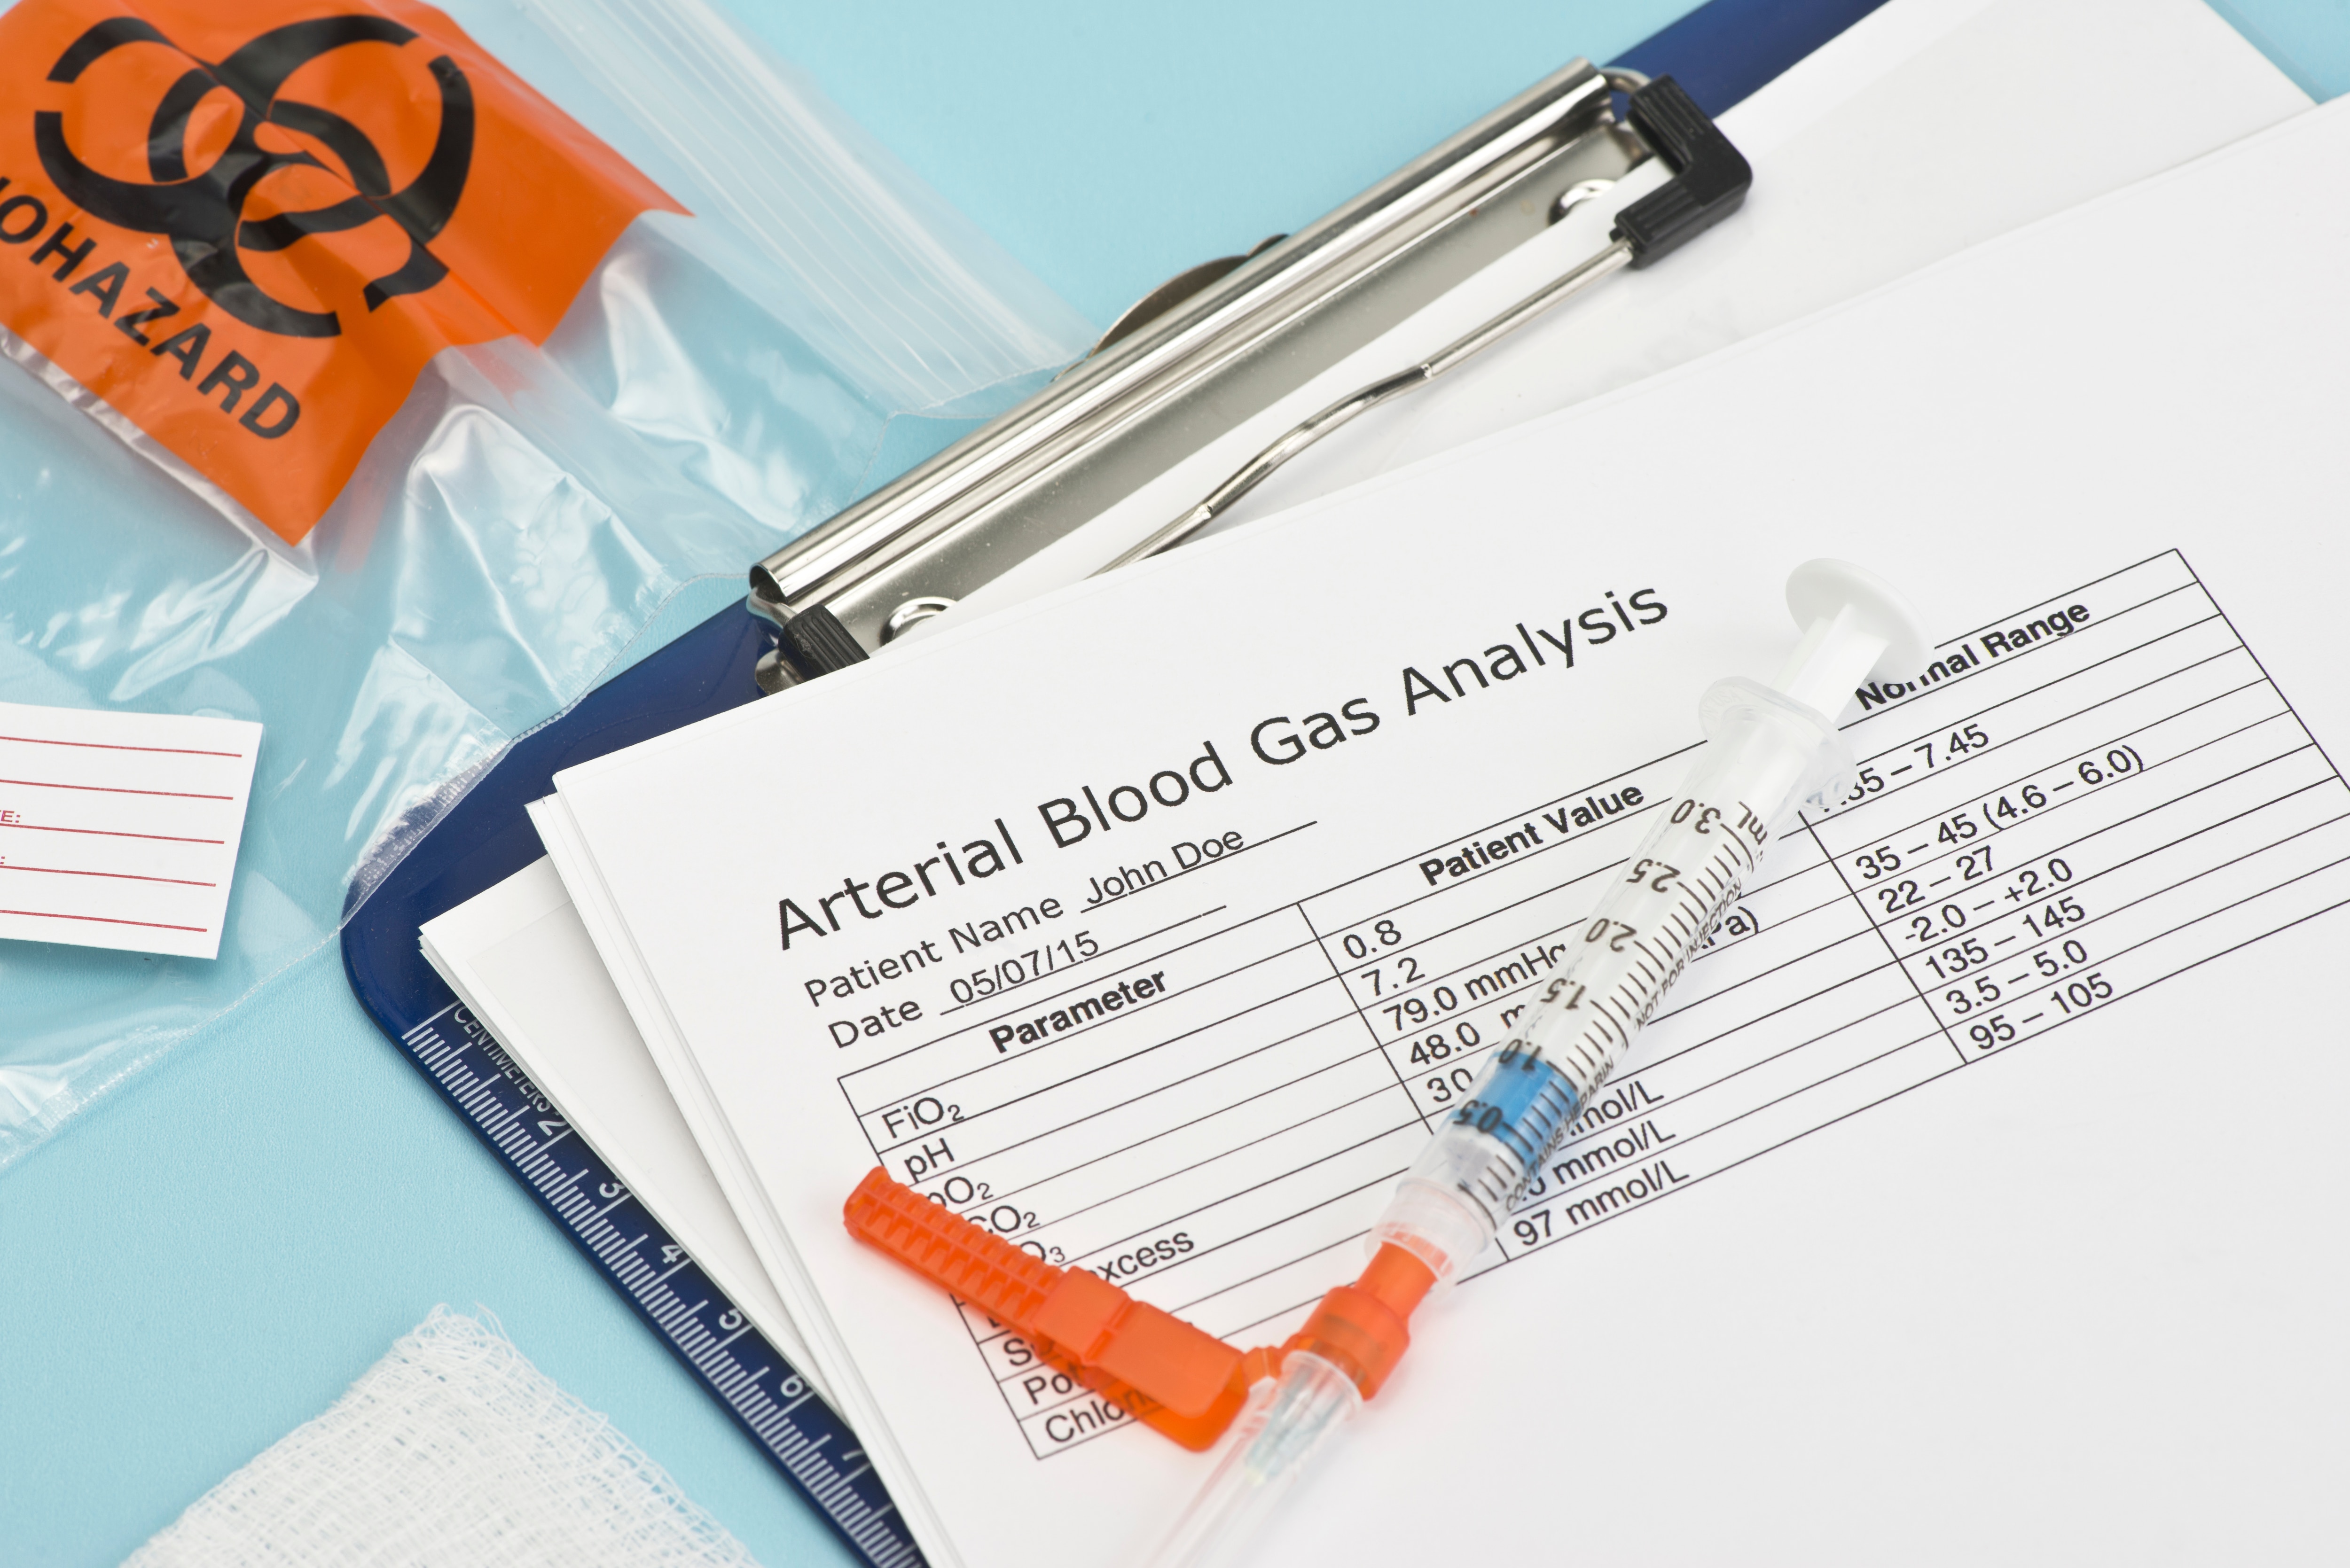 AX_CORP_AdobeStock_Blood-Gas-Analysis_IM_85613843_Preview.jpeg